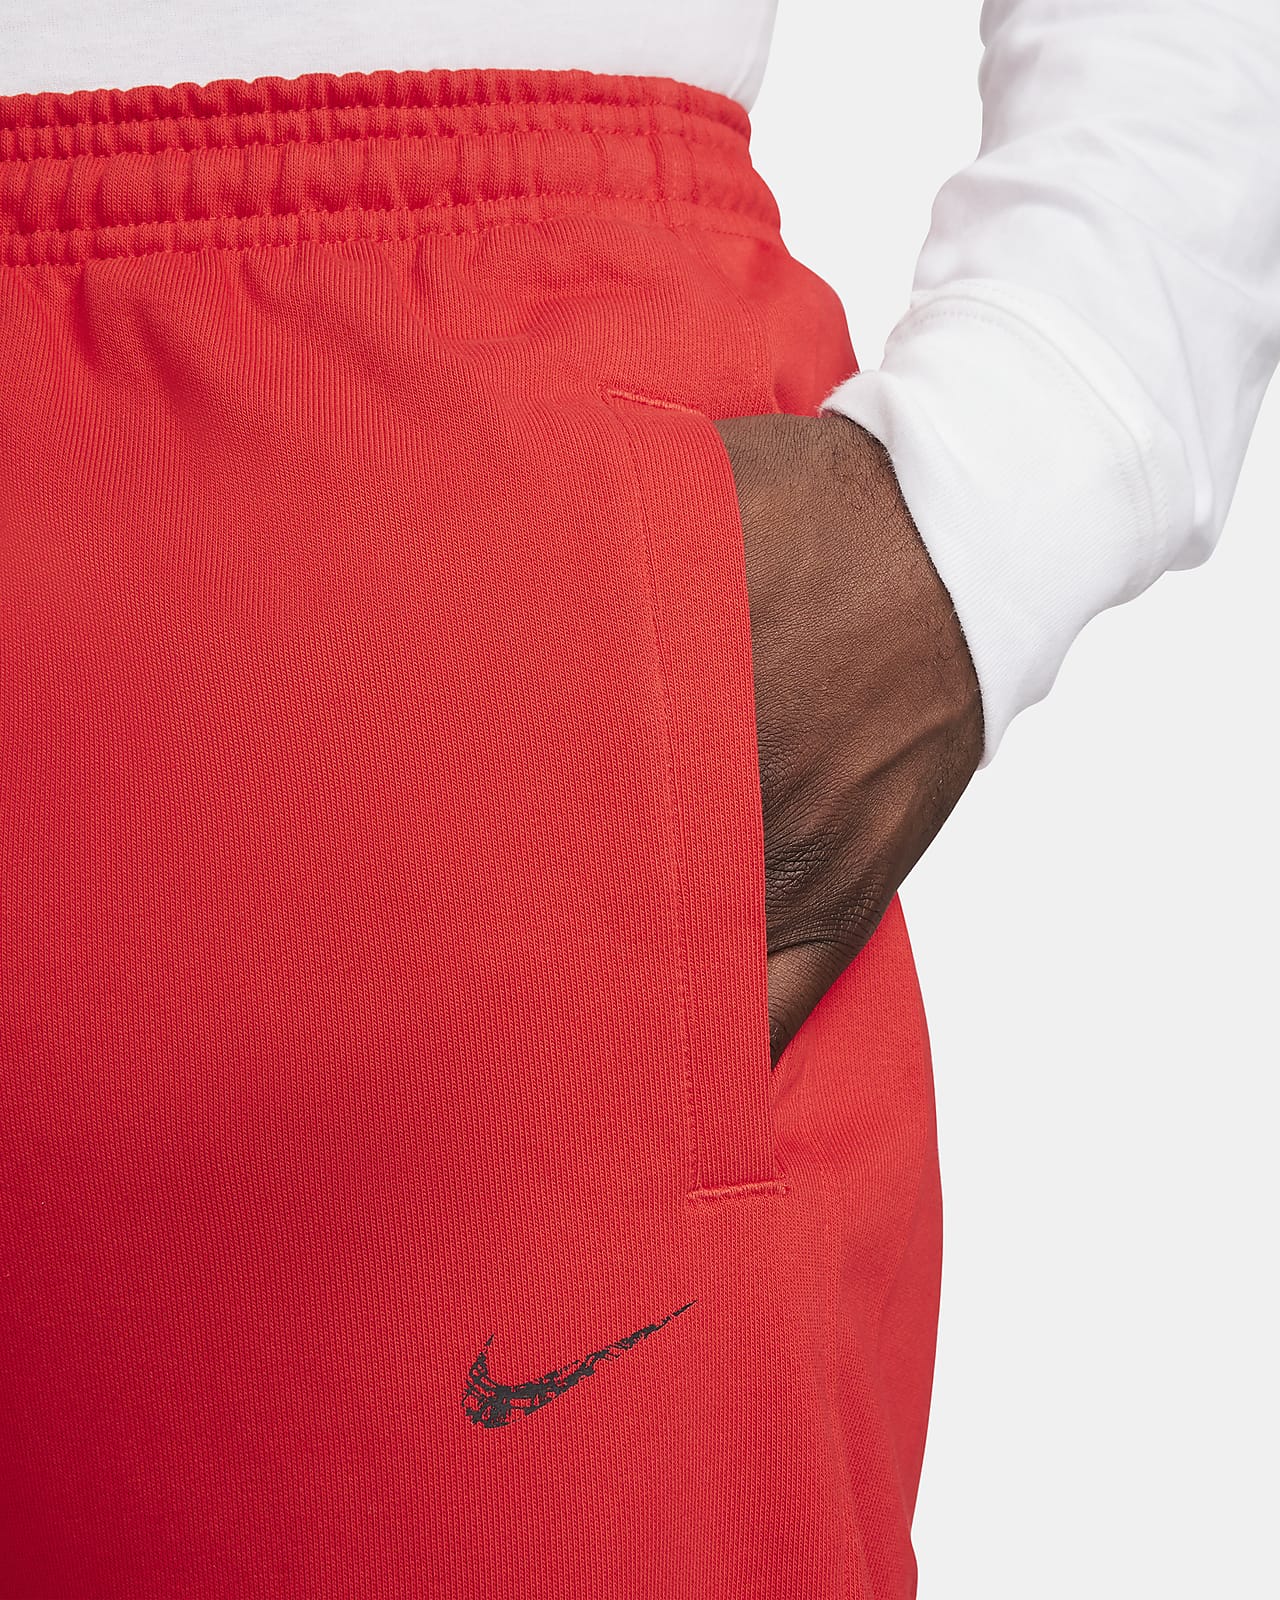 Nike Dri-FIT Standard Issue Men's Basketball Pants.